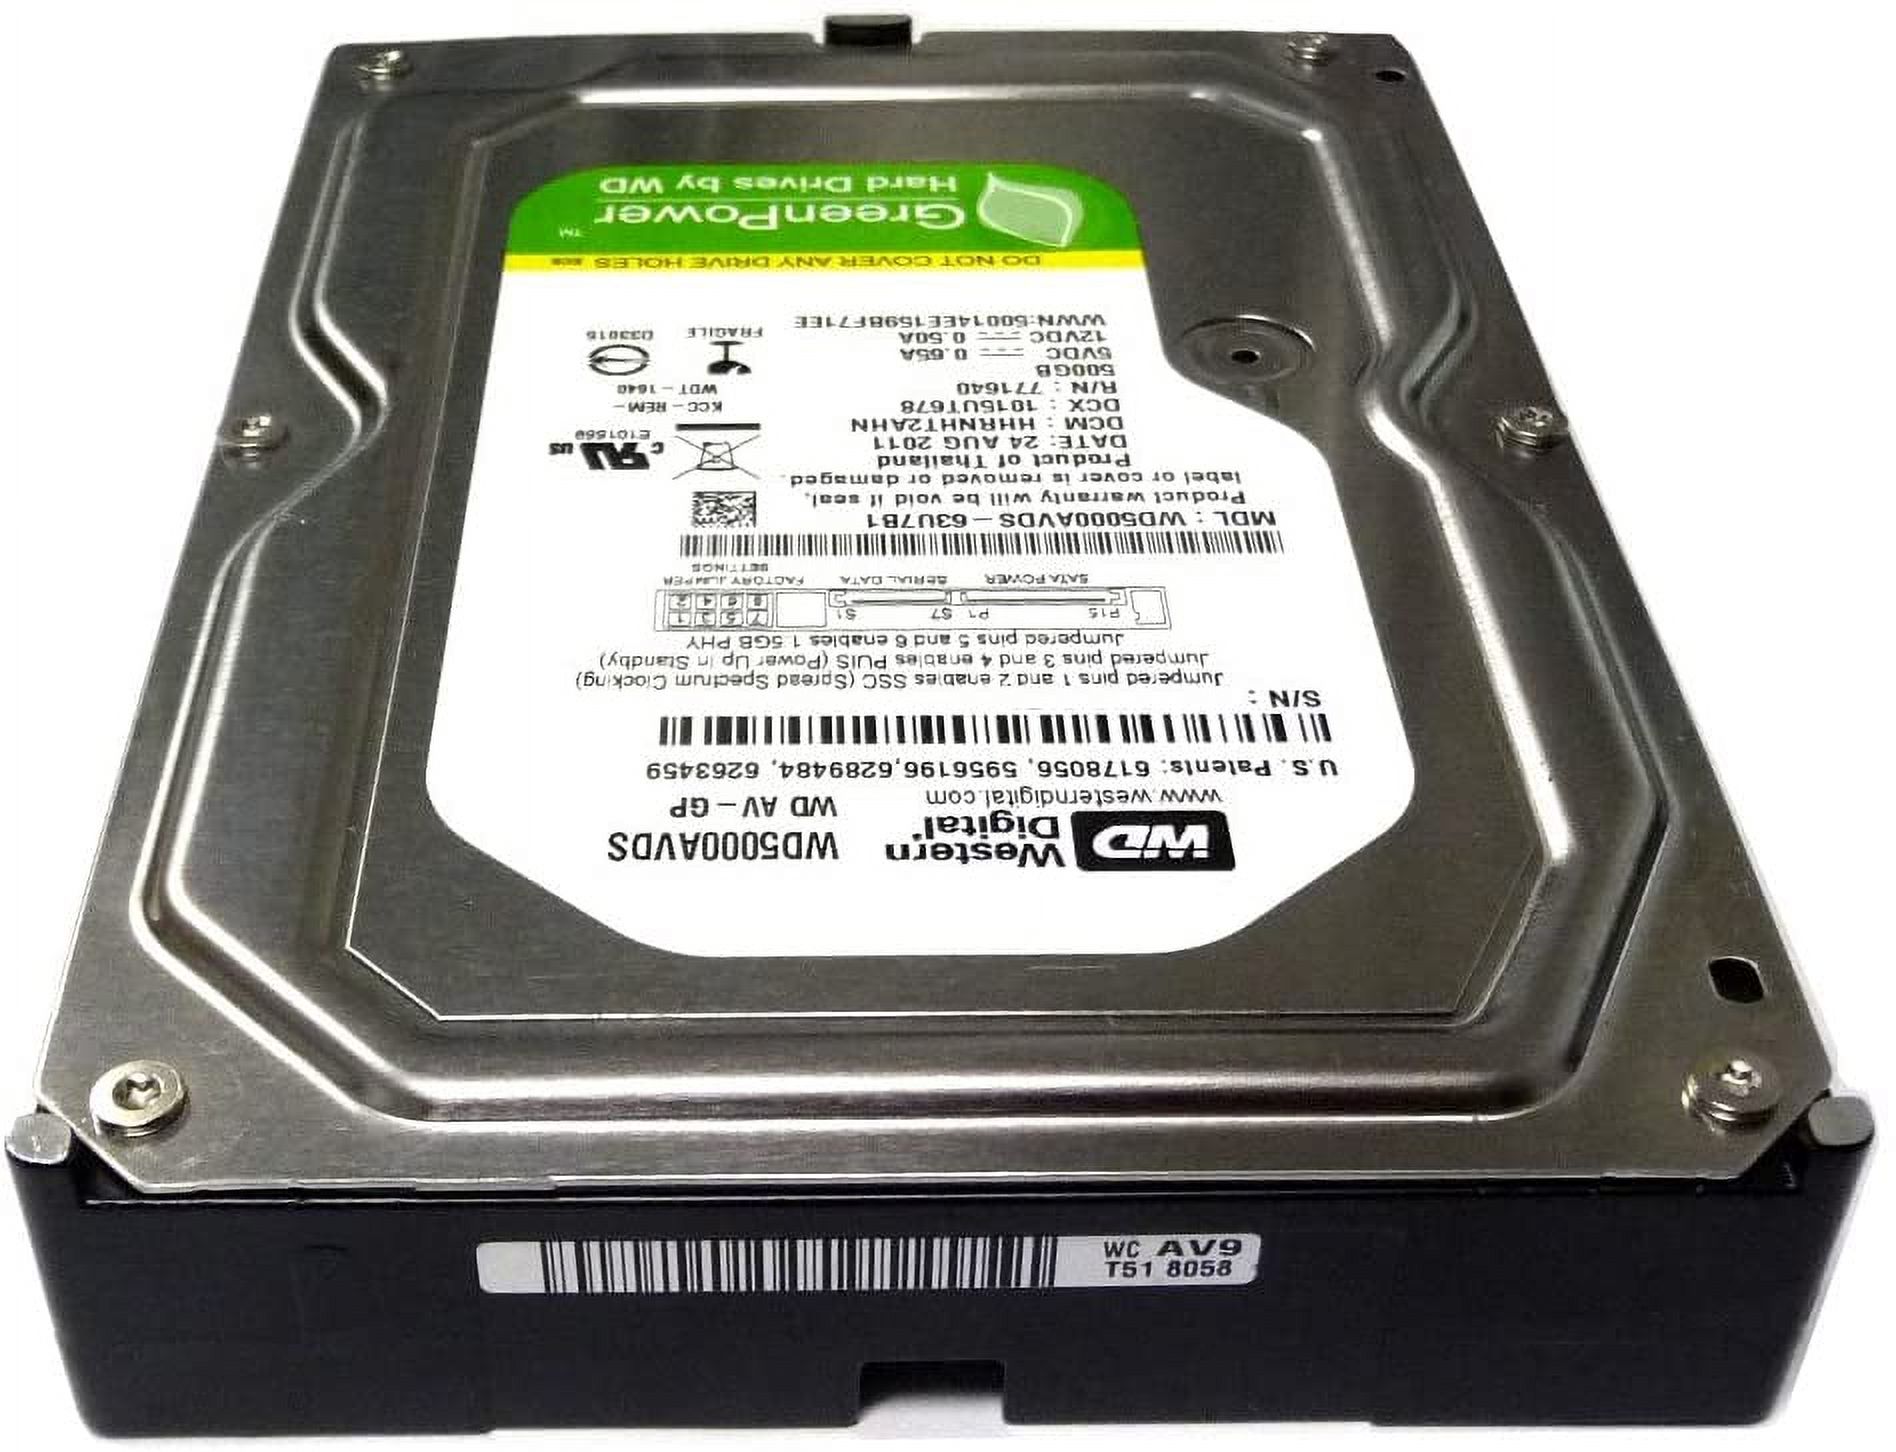 WD Western Digital AV-GP 500GB 32MB Cache SATA 3.0Gb/s 3.5inch (CCTV DVR, PC) Internal Hard Drive (Low power, Quiet) - image 3 of 5